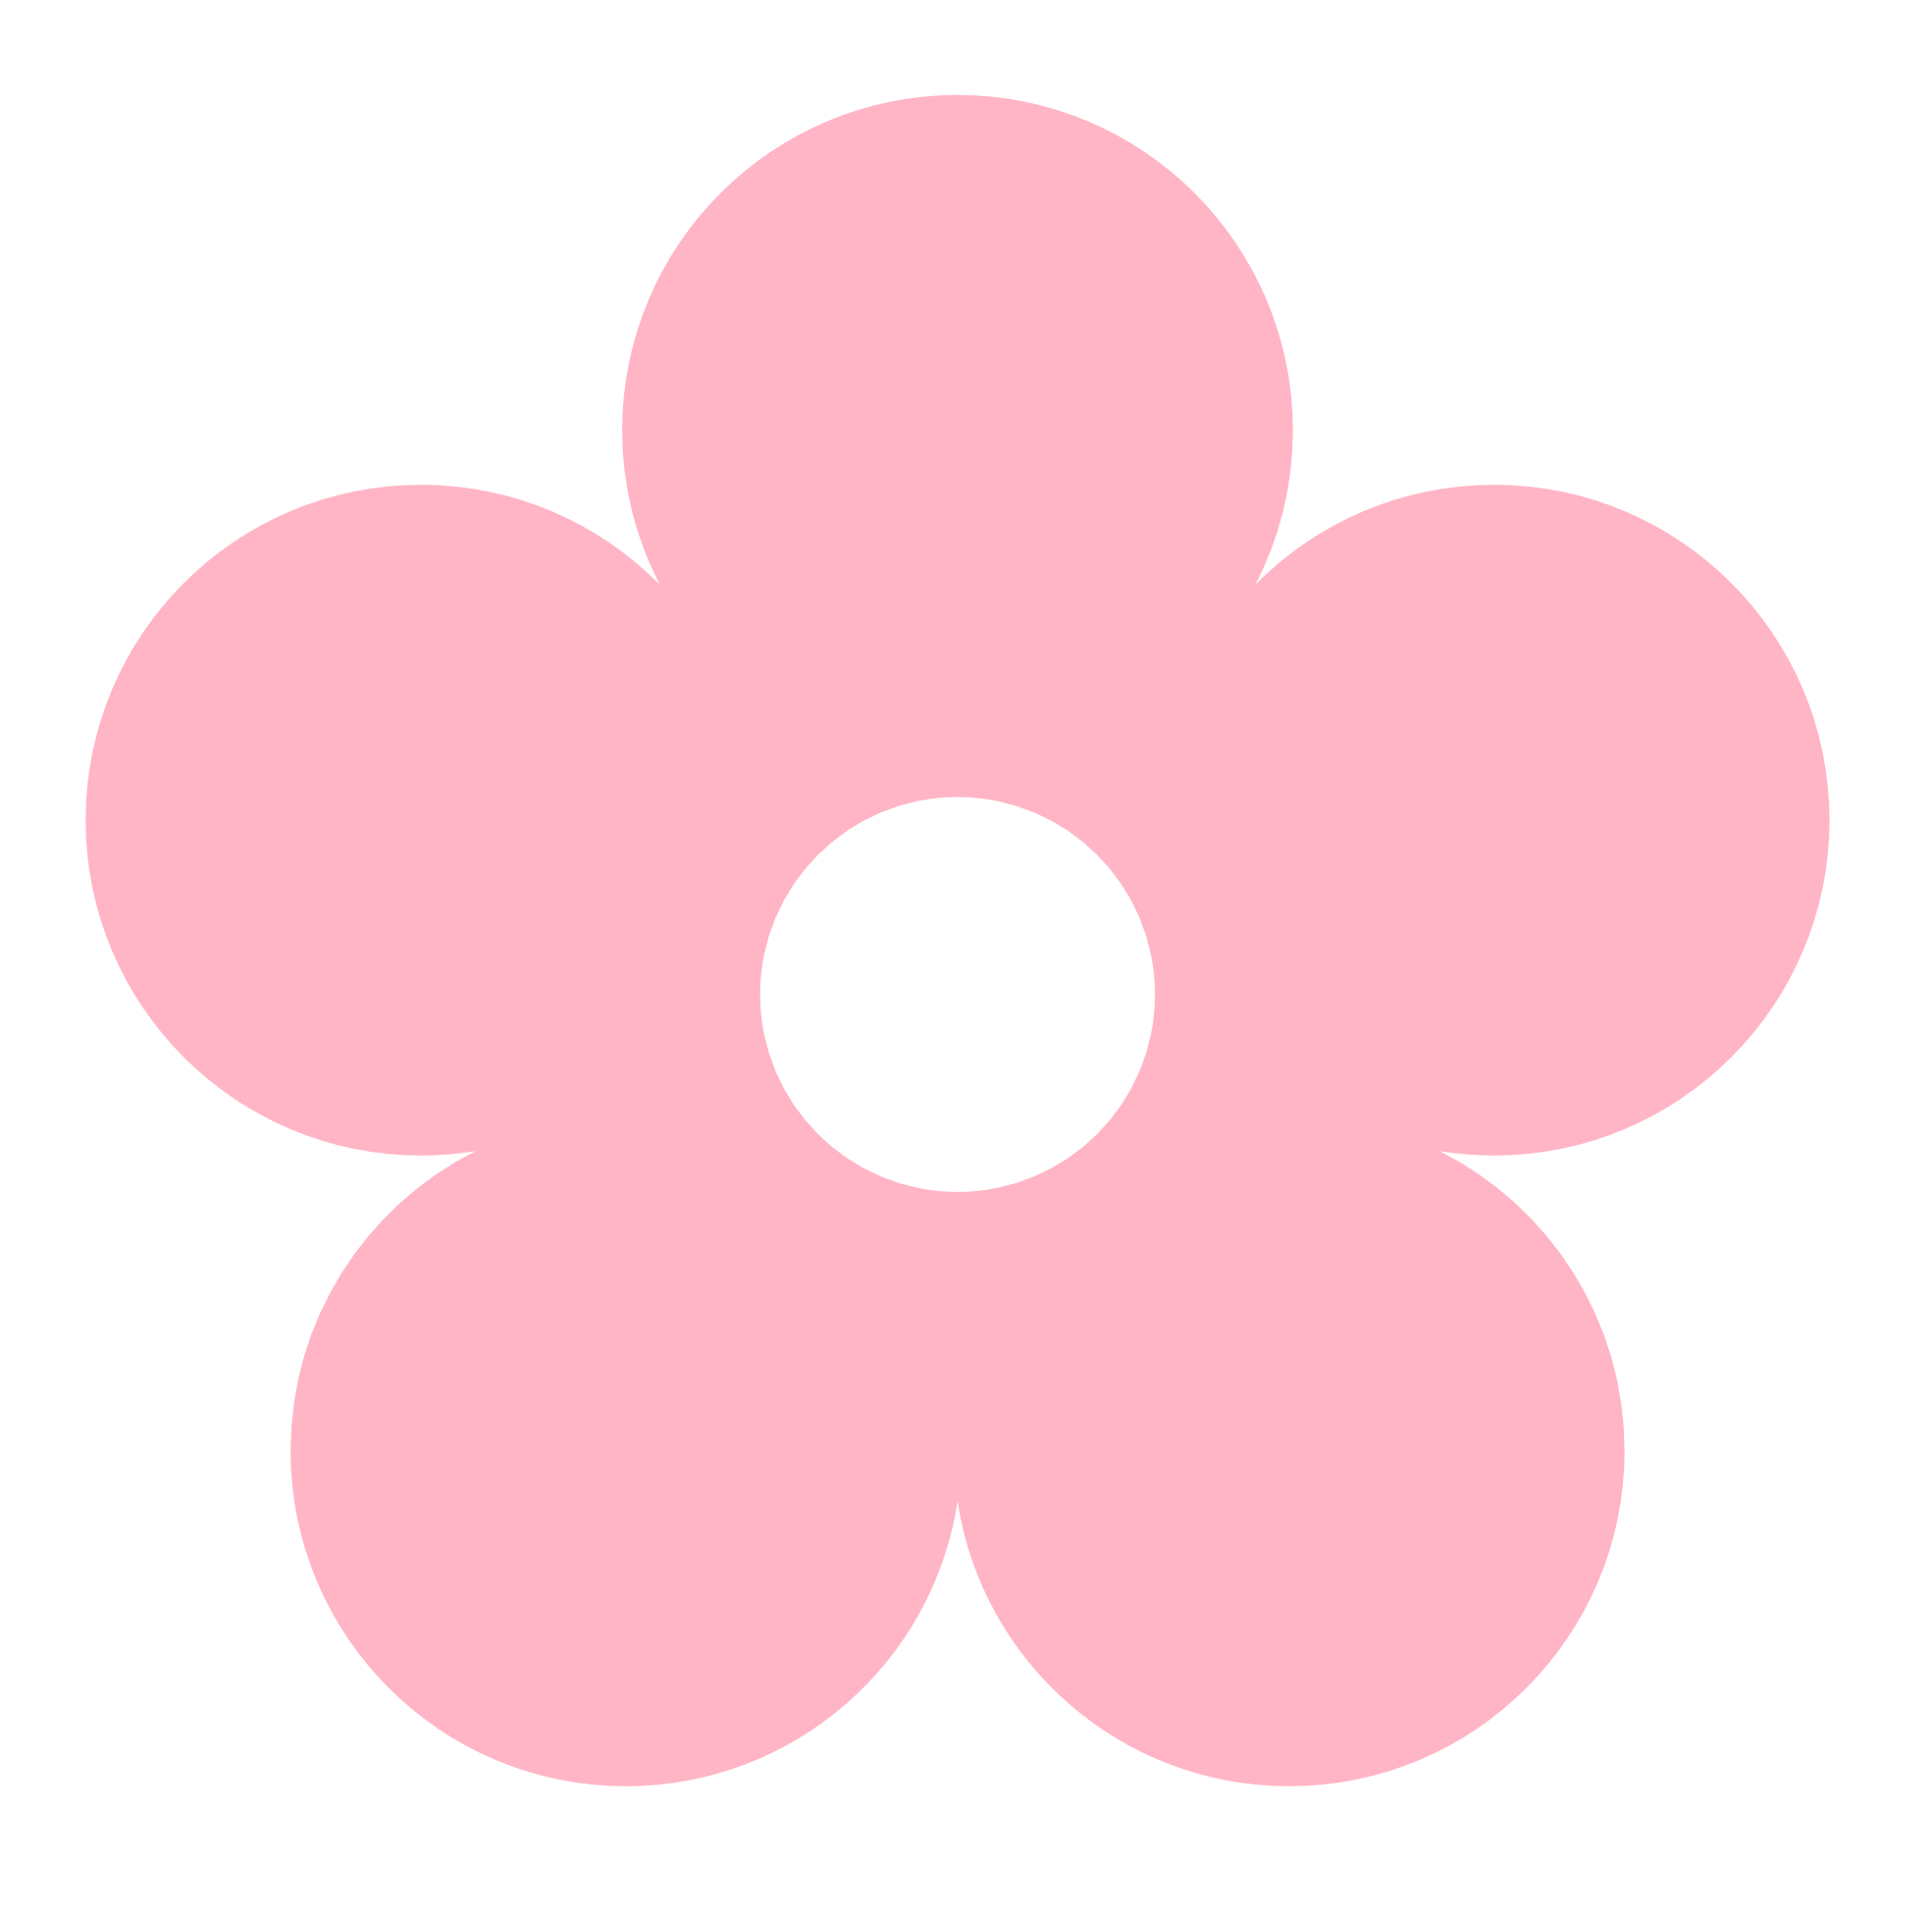 Retro Flower 1 Color Colour Pink 1 Peace xochi.info ...